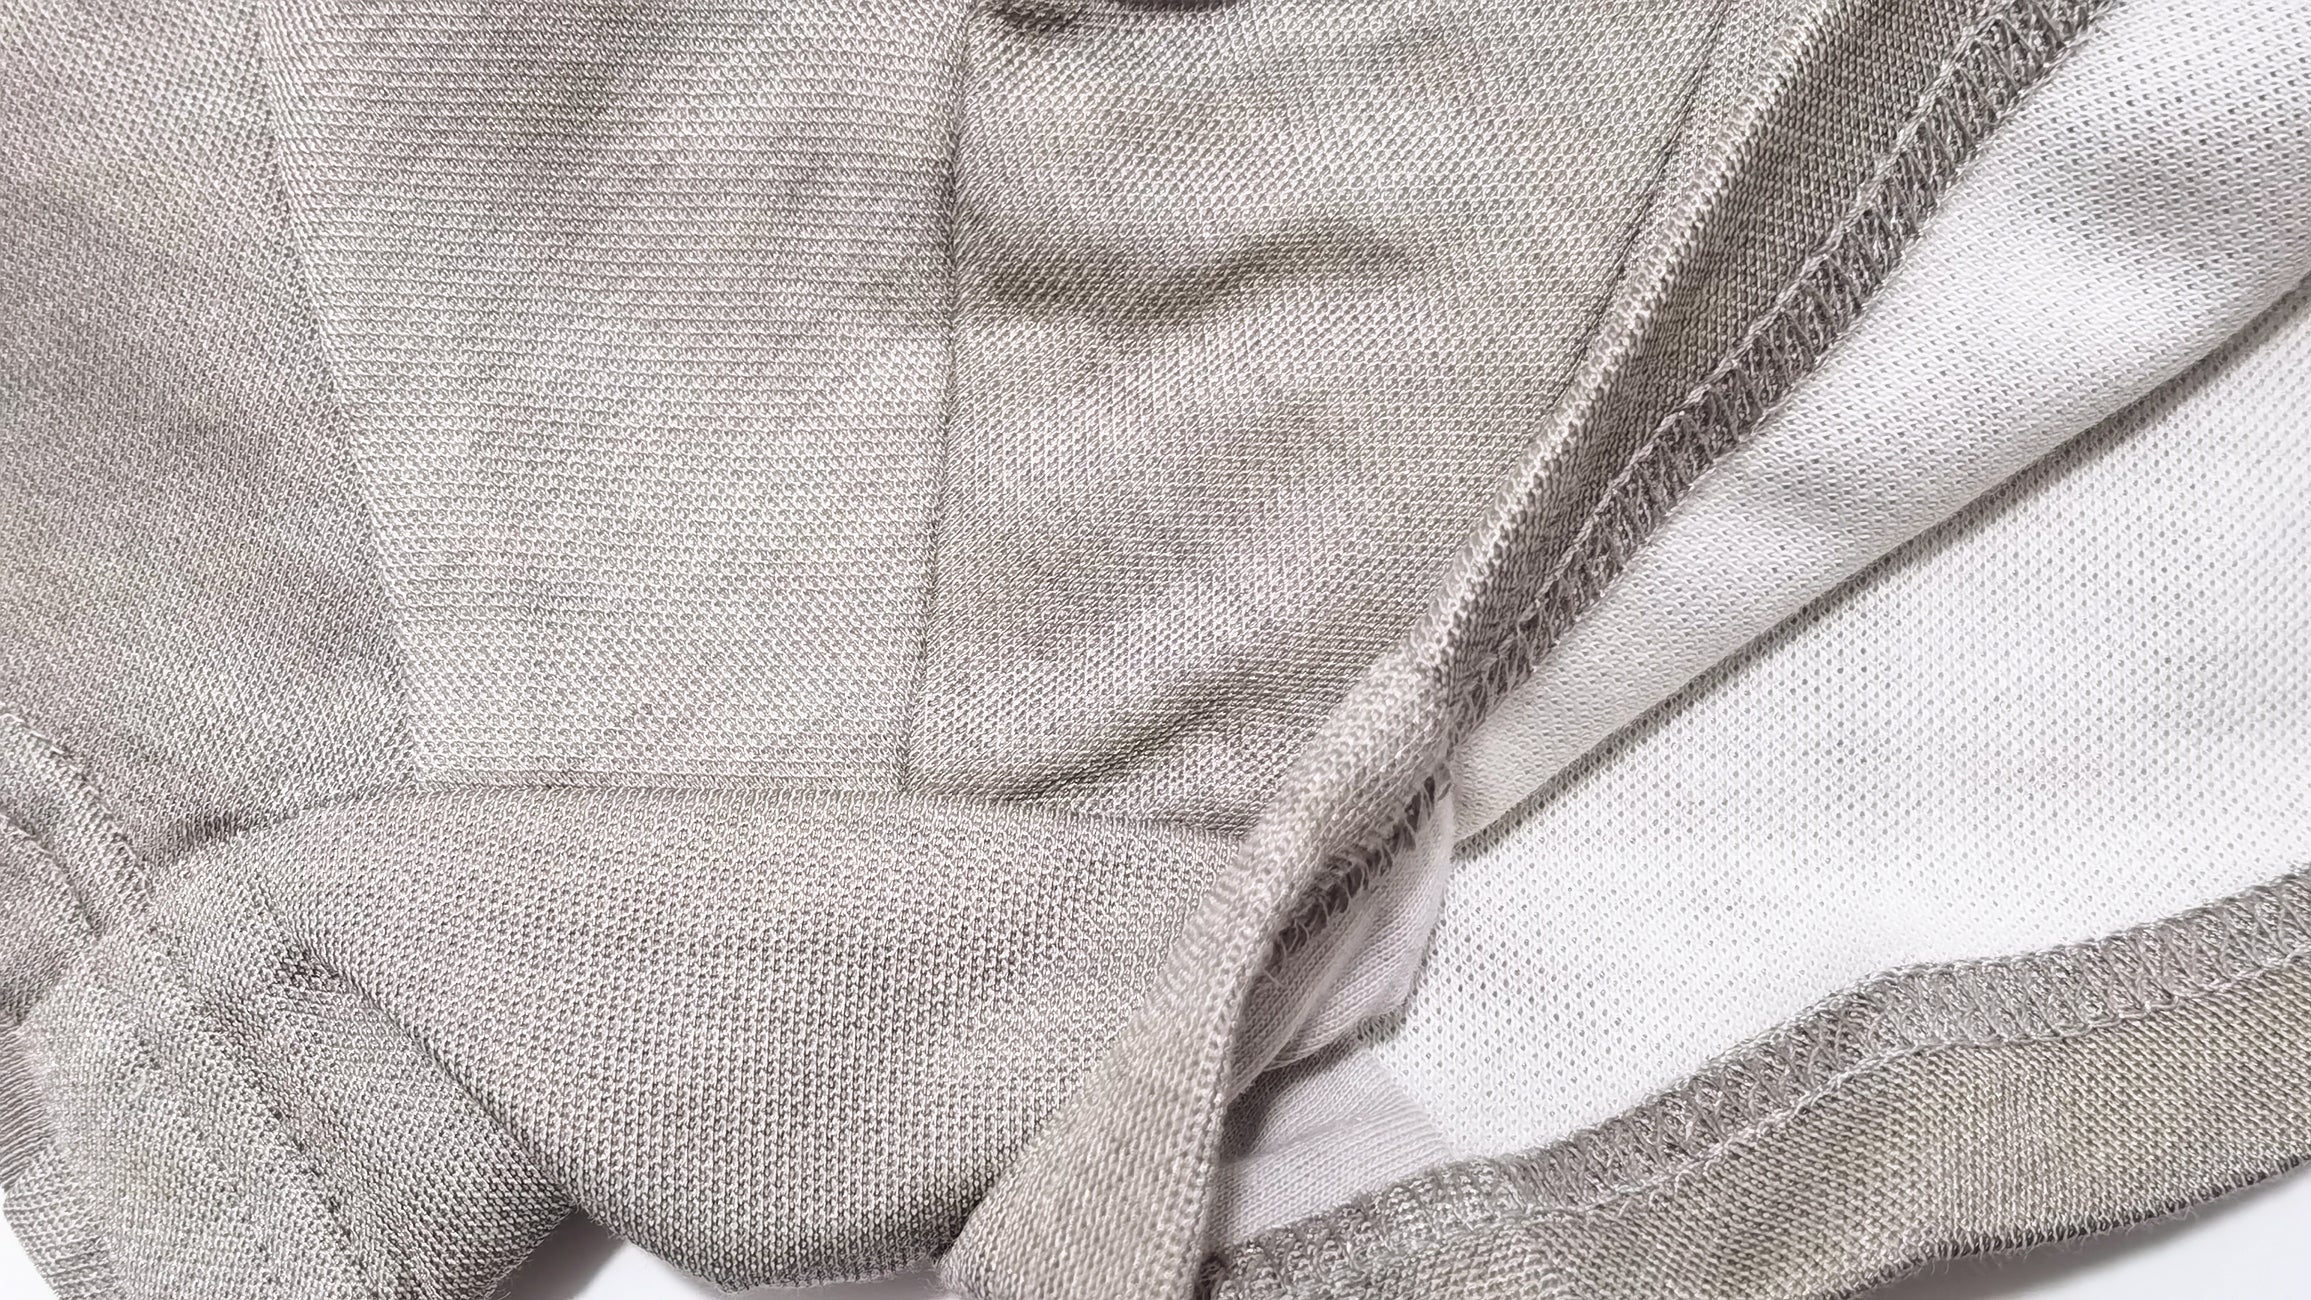 Unisex Underwear Boxer Briefs-Anti-Radiation RF EMF Protection Shorts Pants Breathable